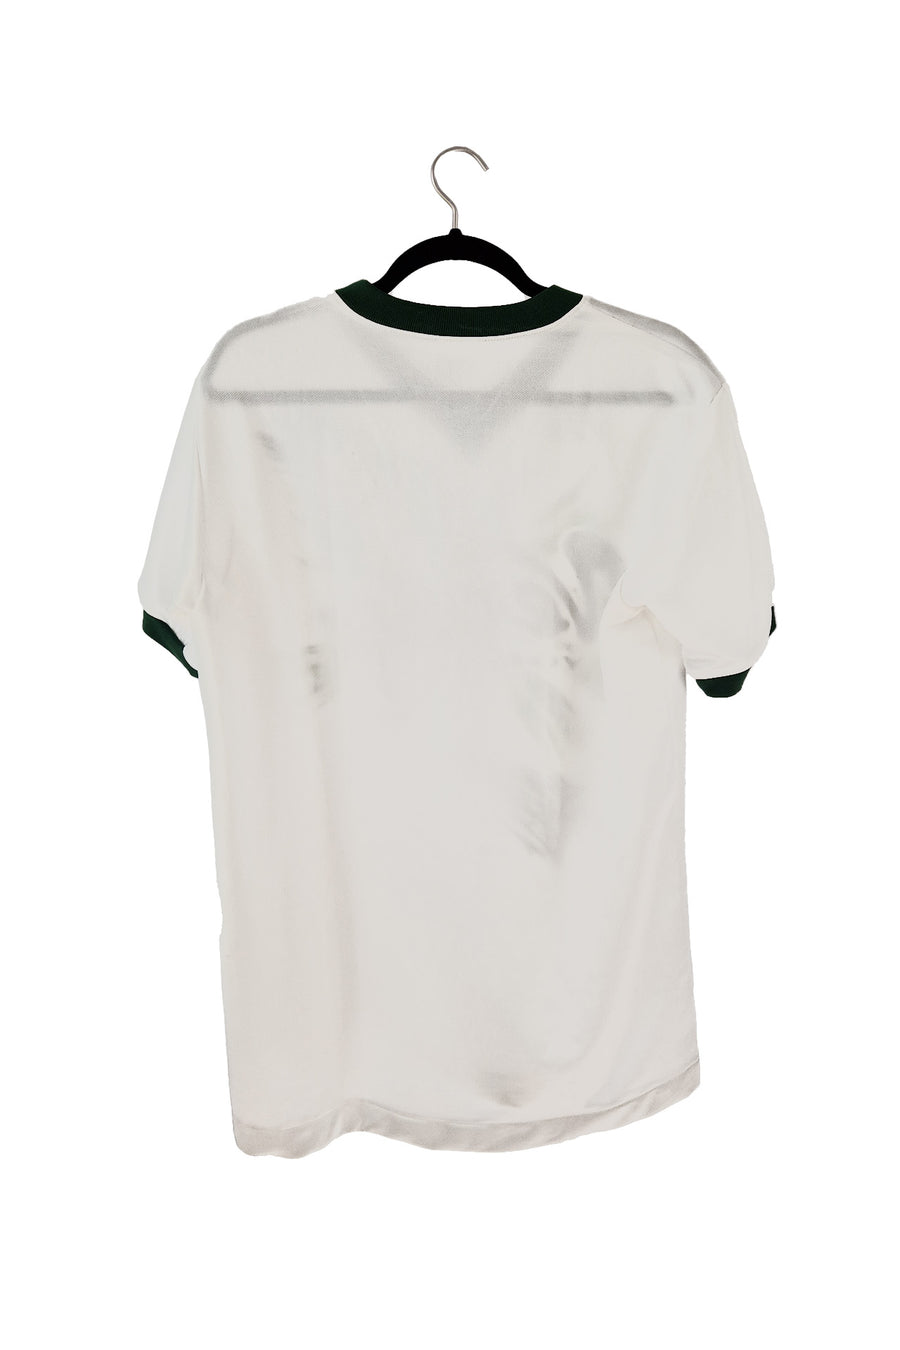 Tokyo Verdy 1995 - 1996 Away Football Shirt